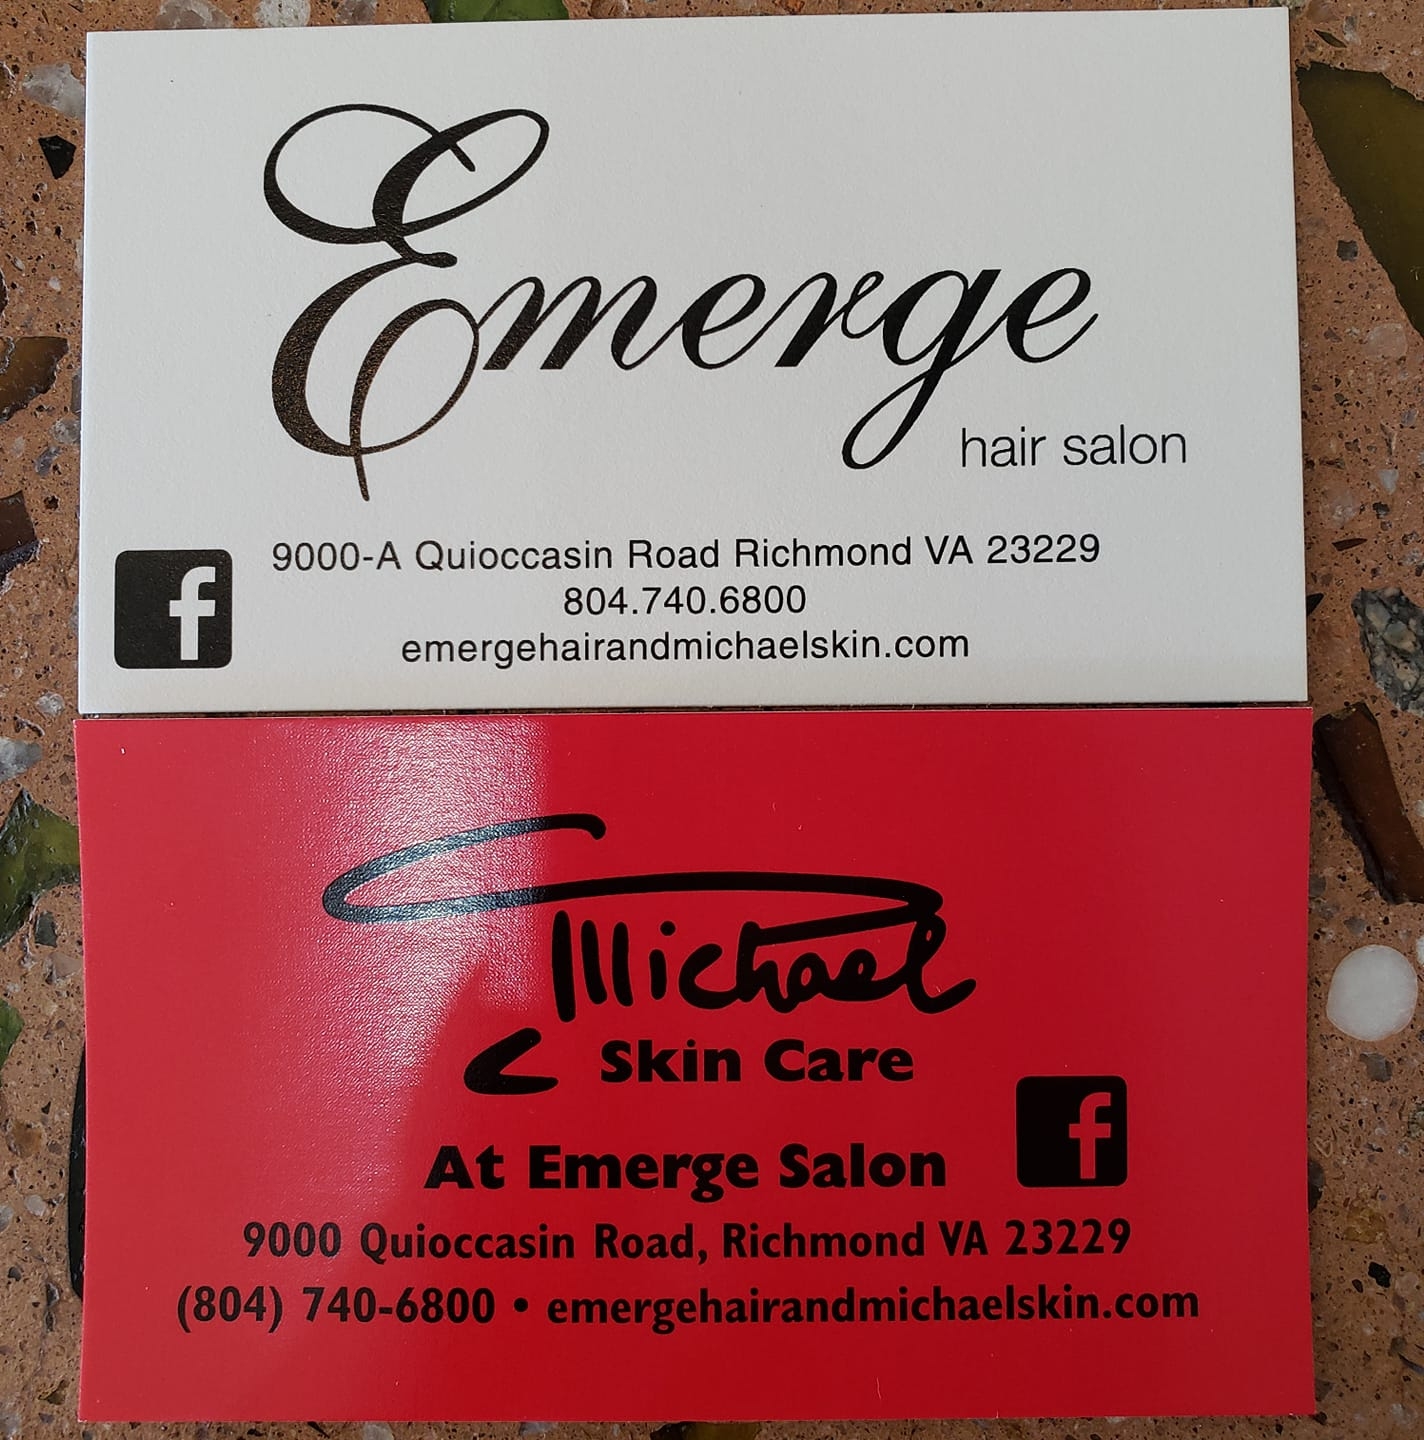 Emerge Hair Salon & Michael's Skin Care